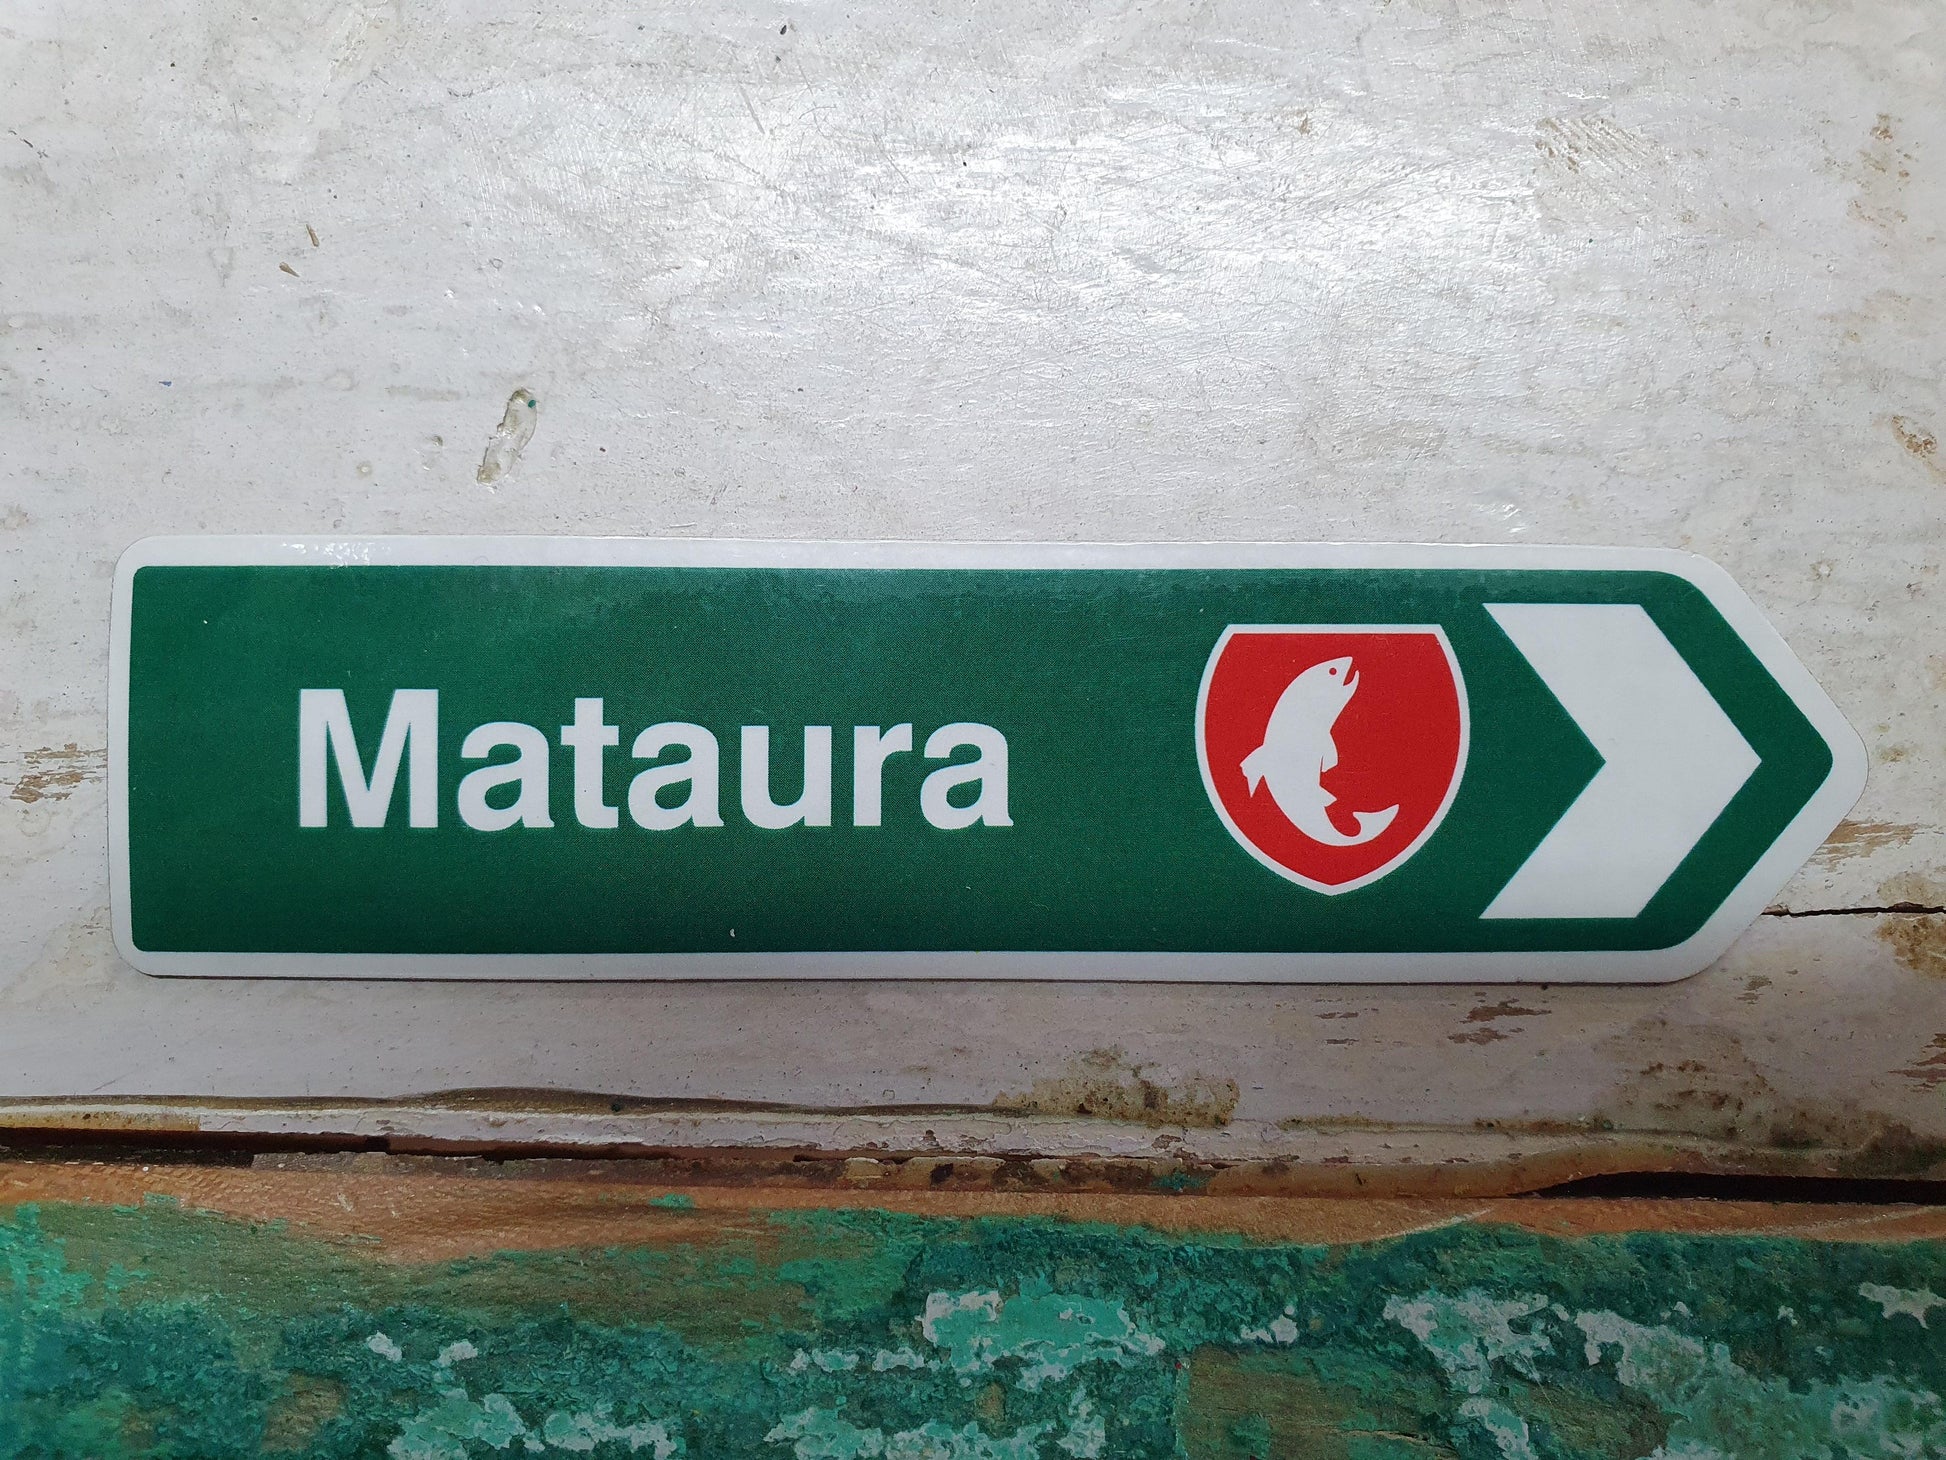 Magnet Road Signs - Mataura